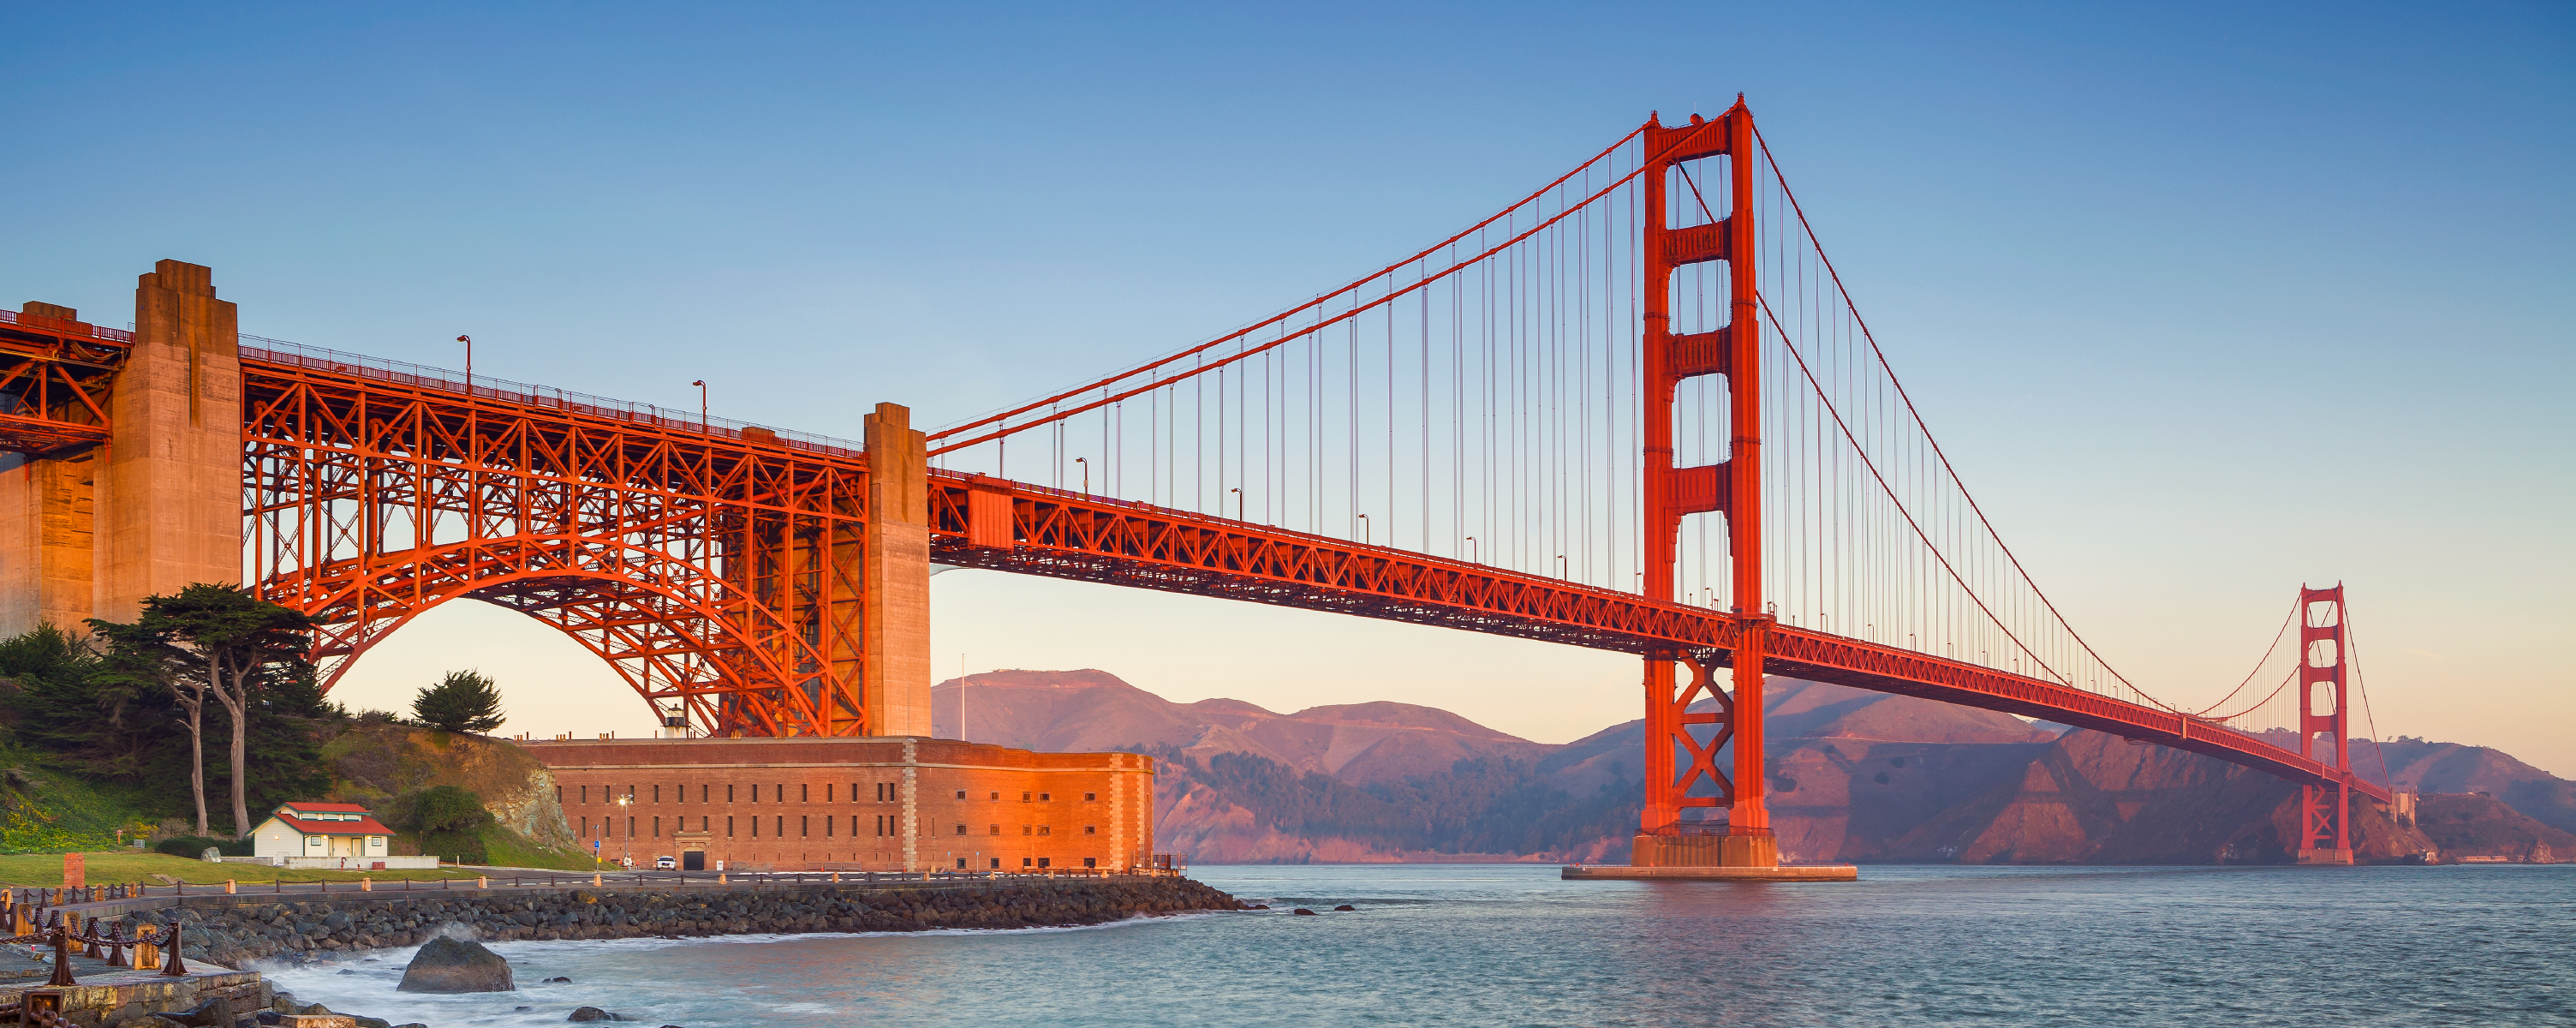 The Golden Gate Bridge from below